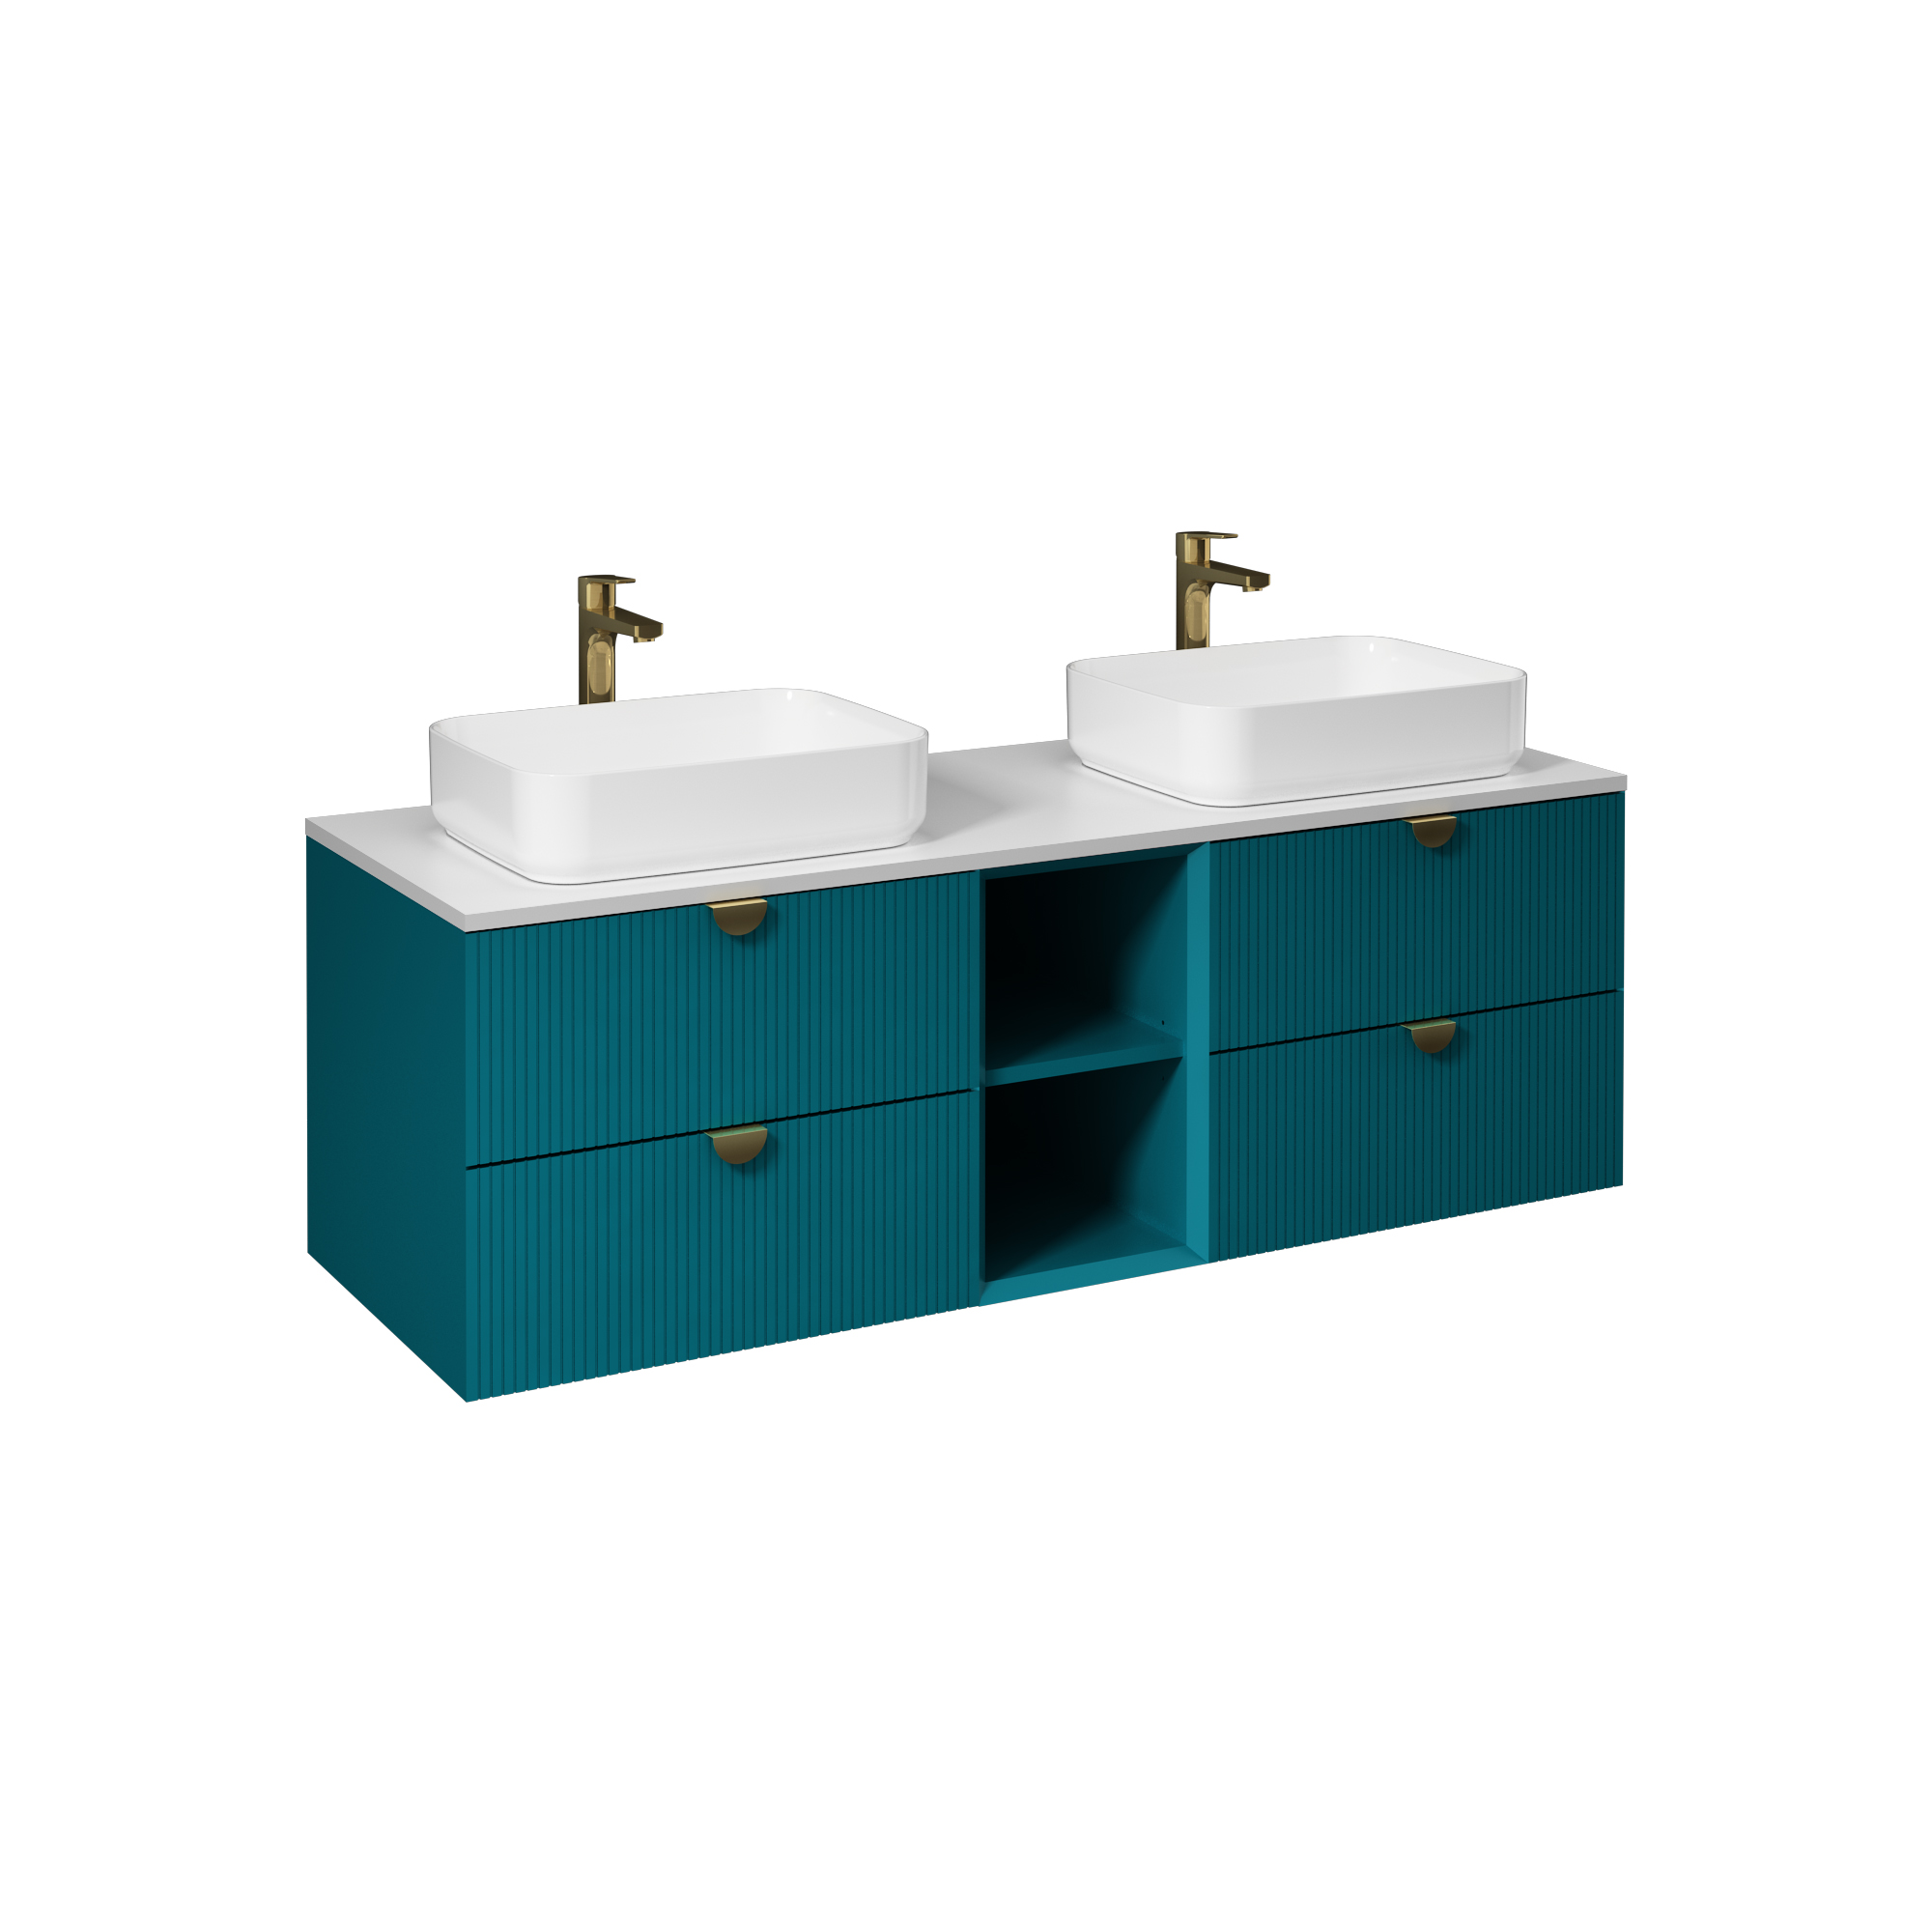 Infinity Washbasin Cabinet Ocean,  with Petrol Green Washbasi 130 cm